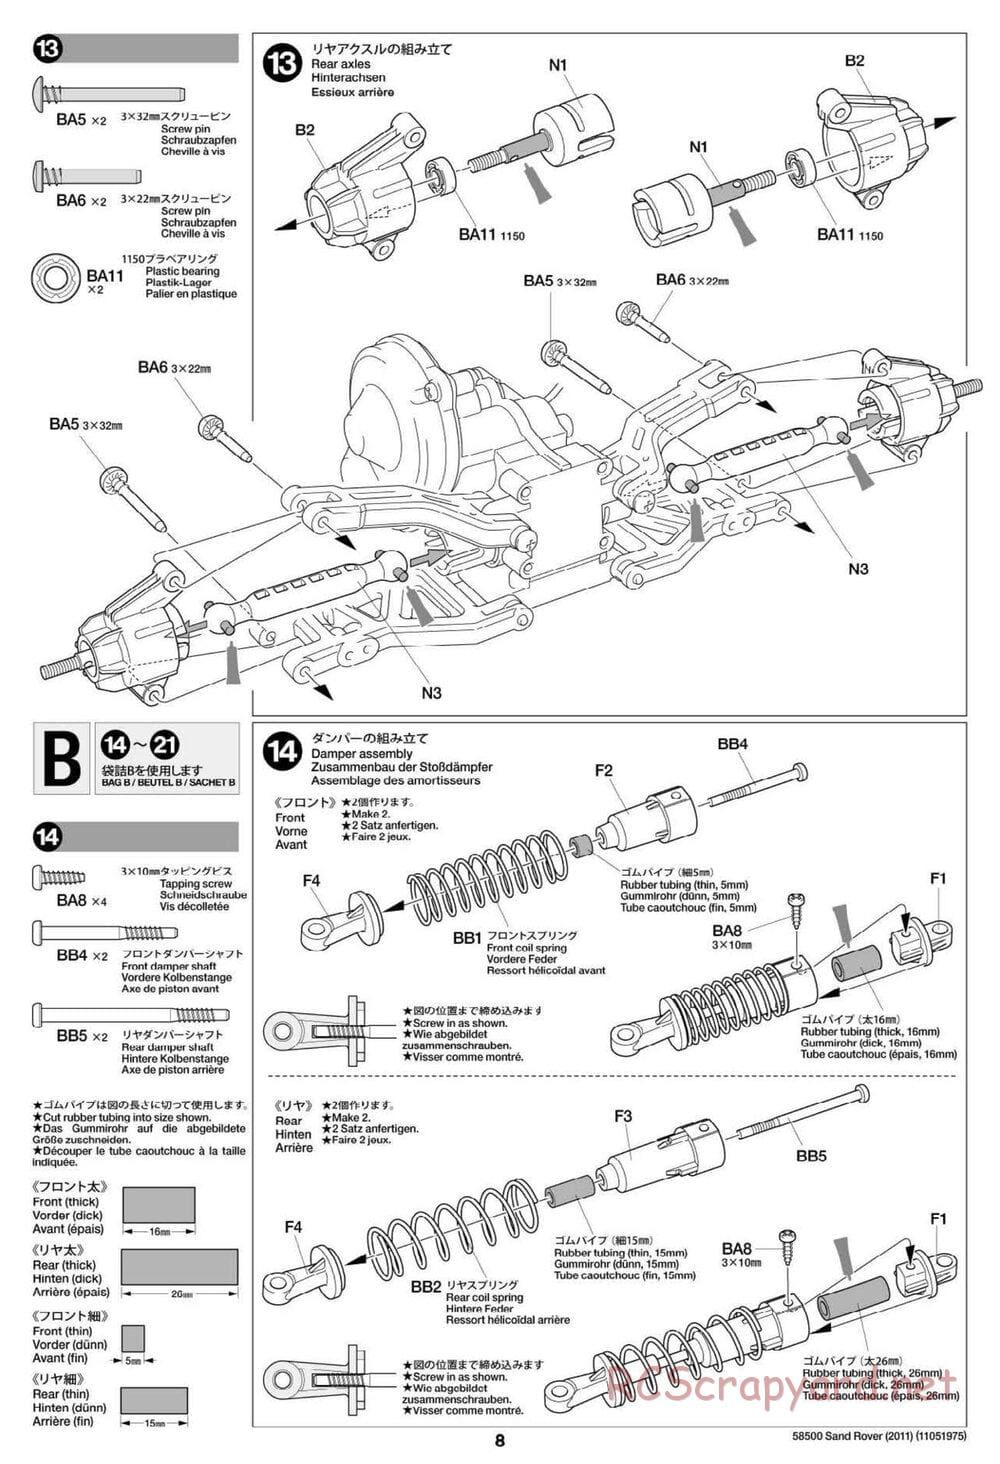 Tamiya - Sand Rover 2011 Chassis - Manual - Page 8